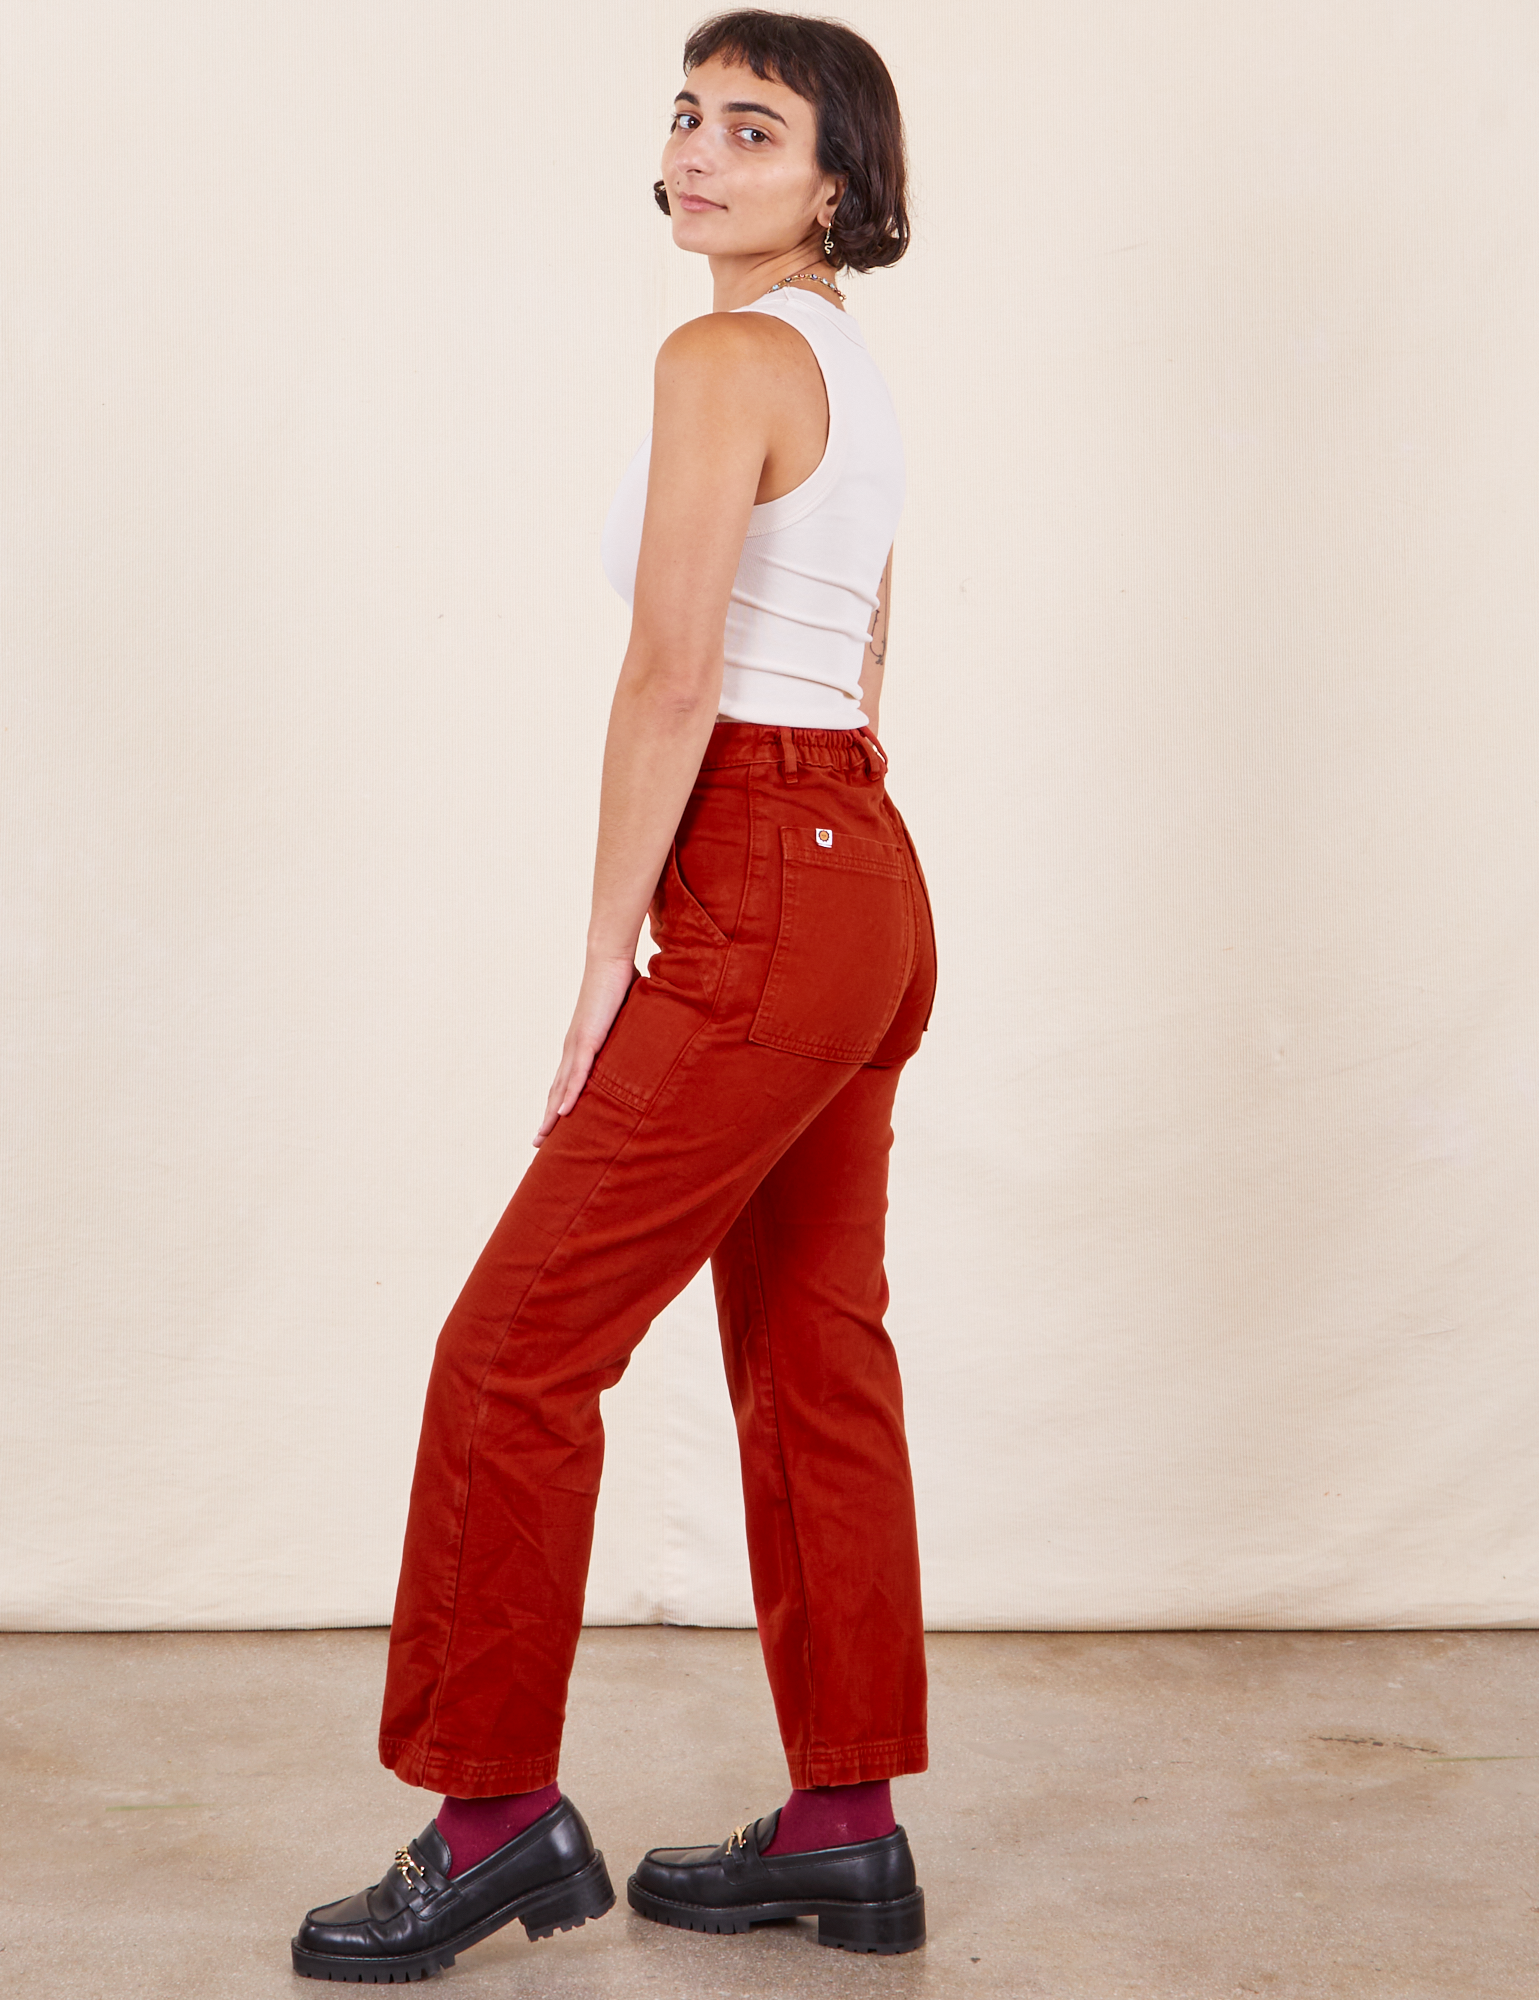 Work Pants in Paprika side view on Soraya wearing a Tank Top in vintage tee off-white